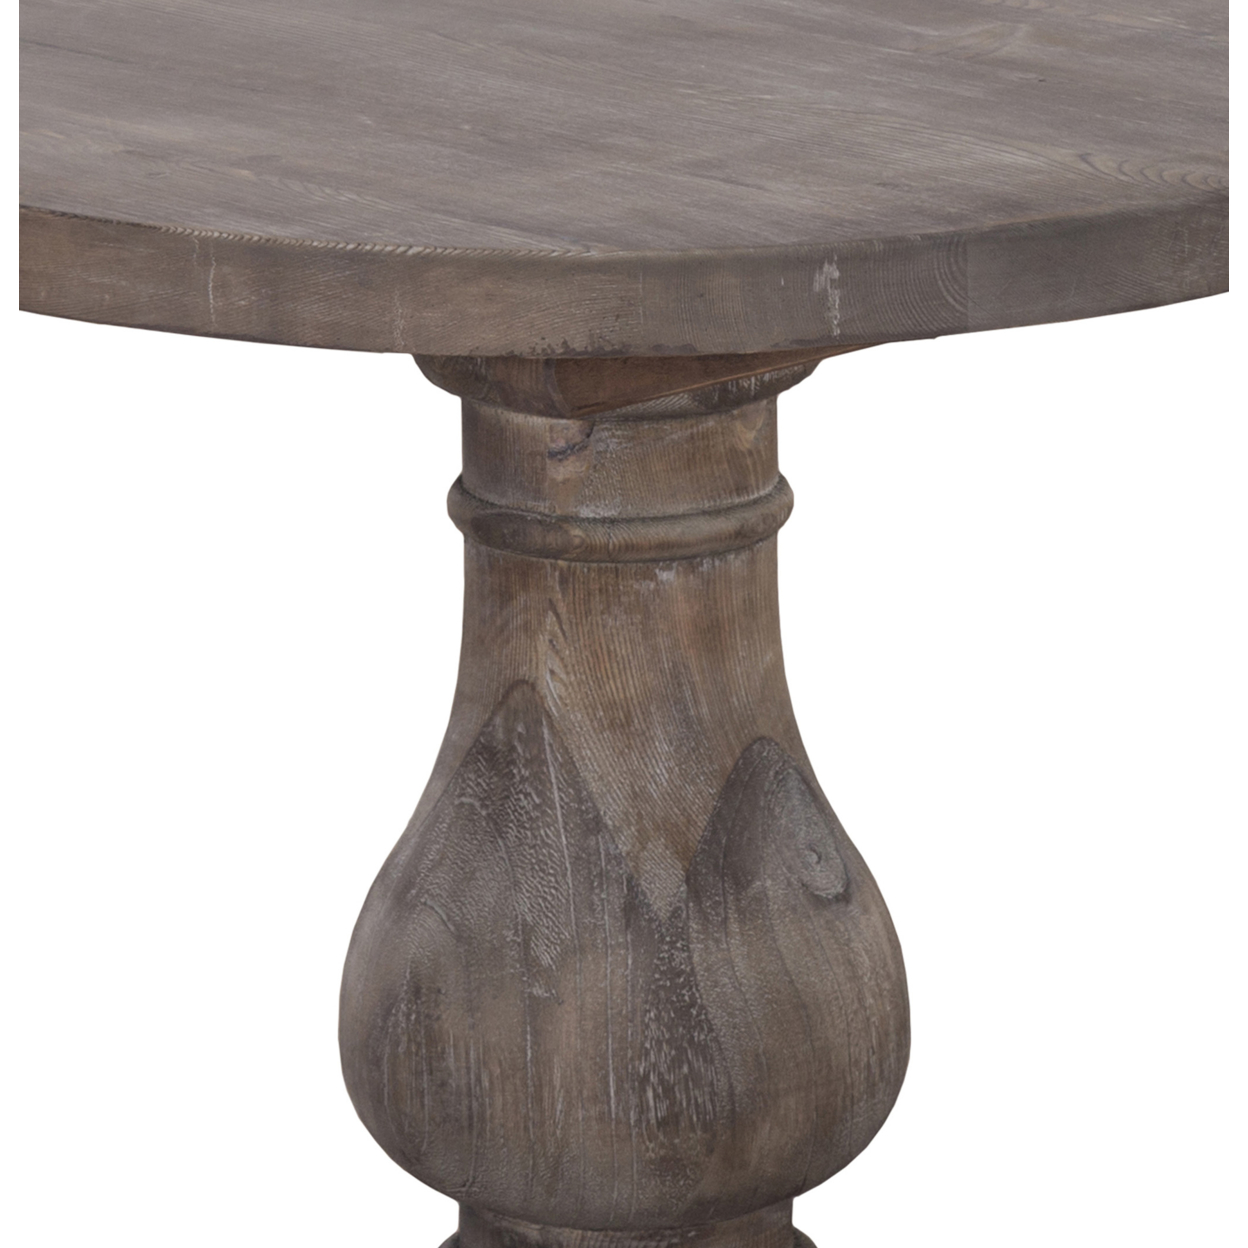 Wooden Round End Table With Pedestal Base, Brown- Saltoro Sherpi